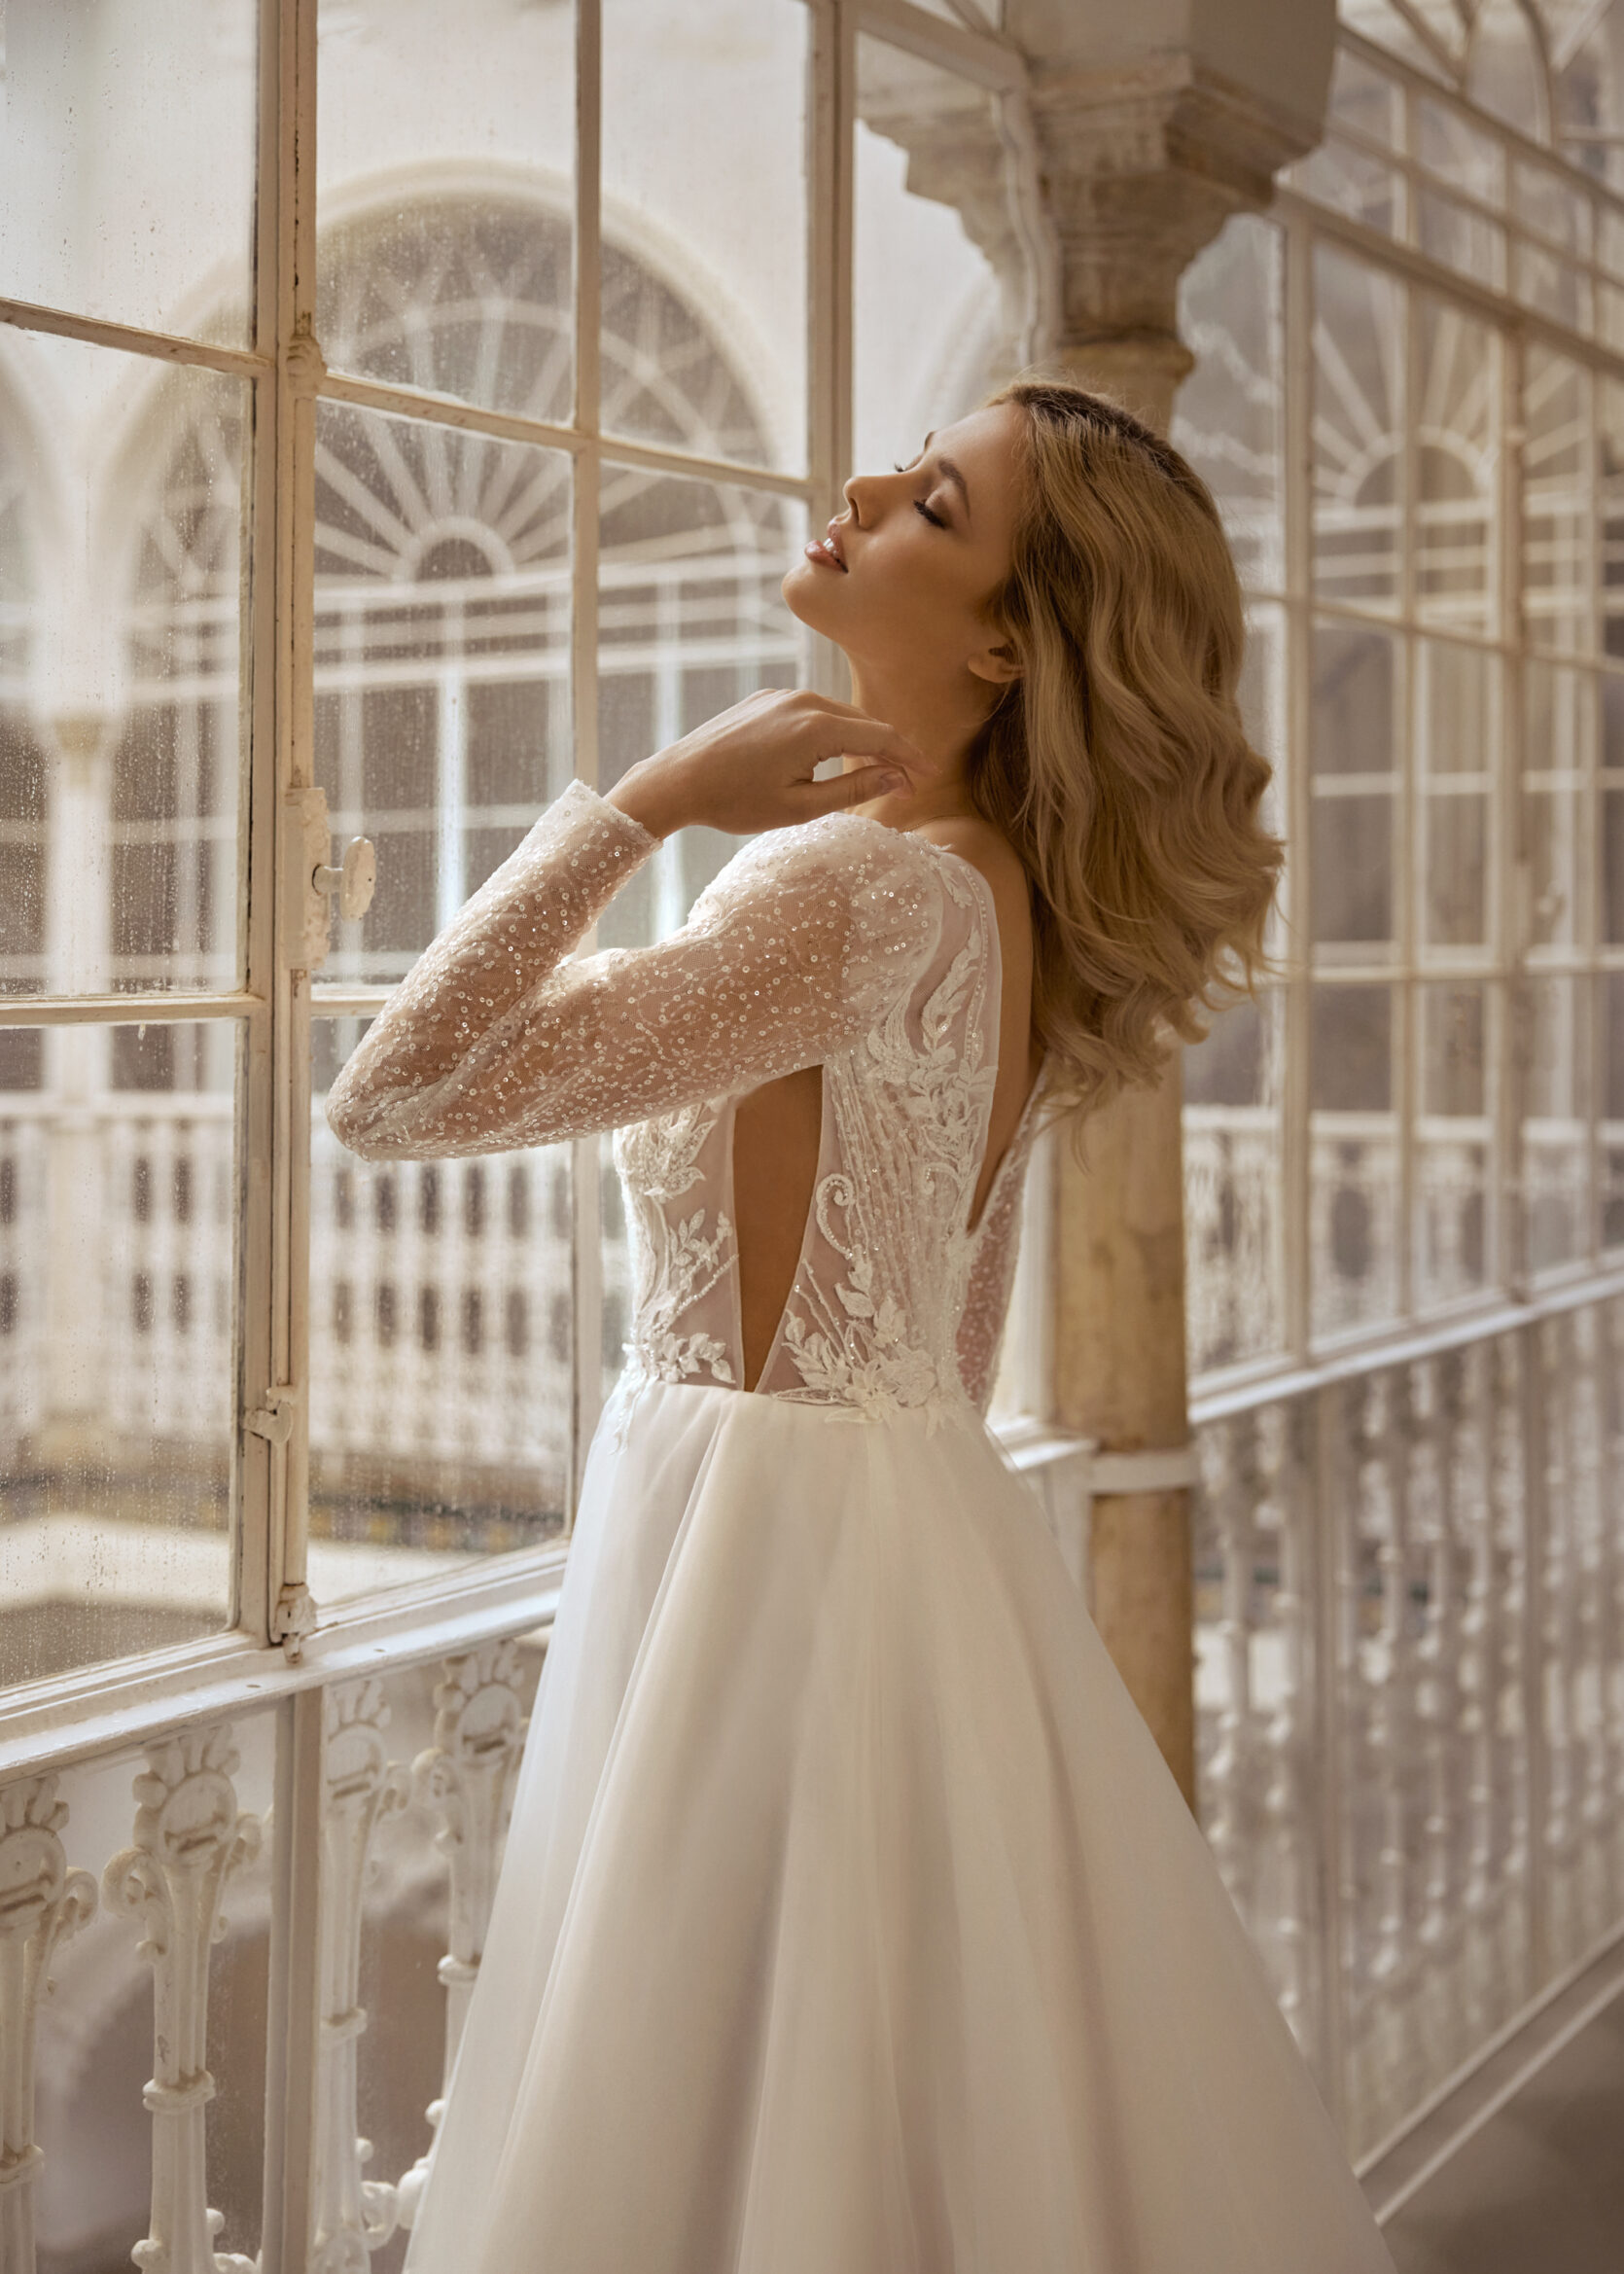 JALEESA | A daring wedding dress with V-neckline | Libelle